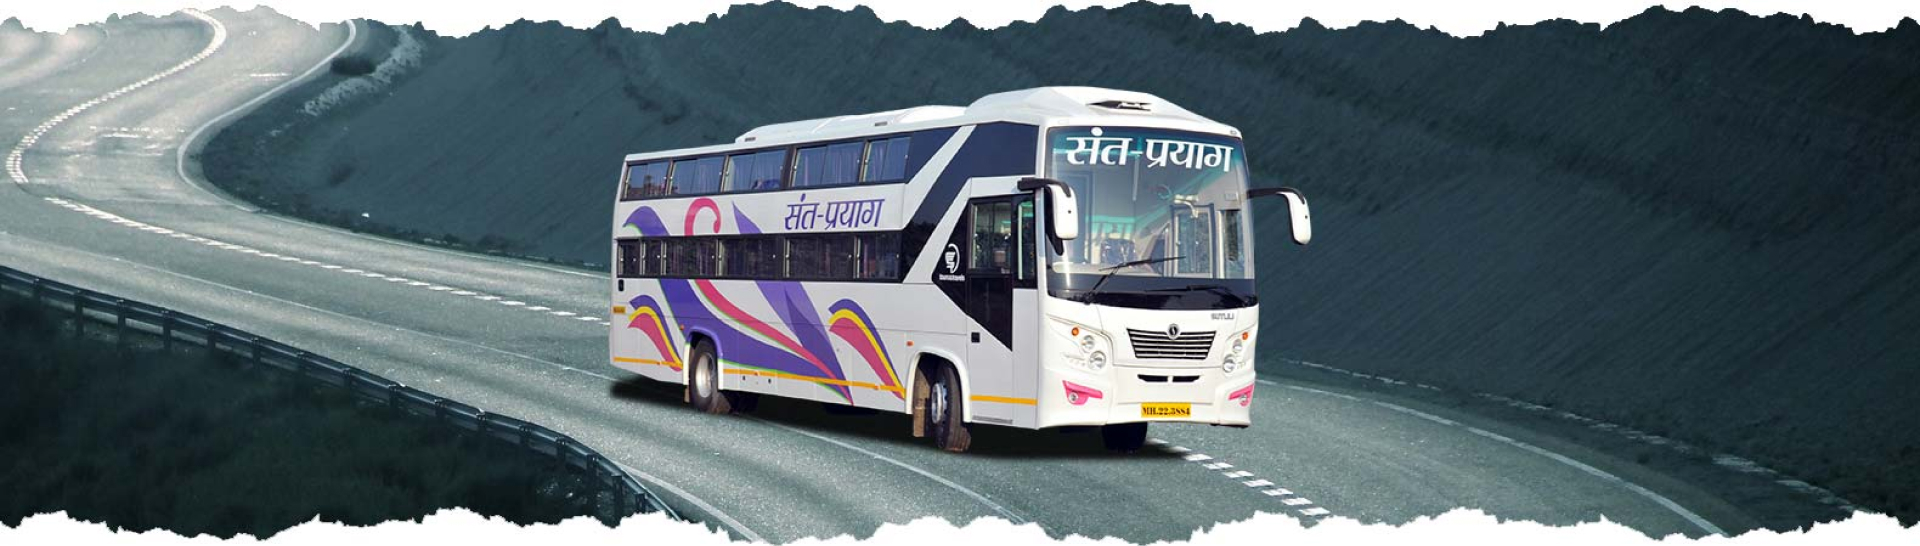 Online Bus Ticket Booking Santprayag Travels